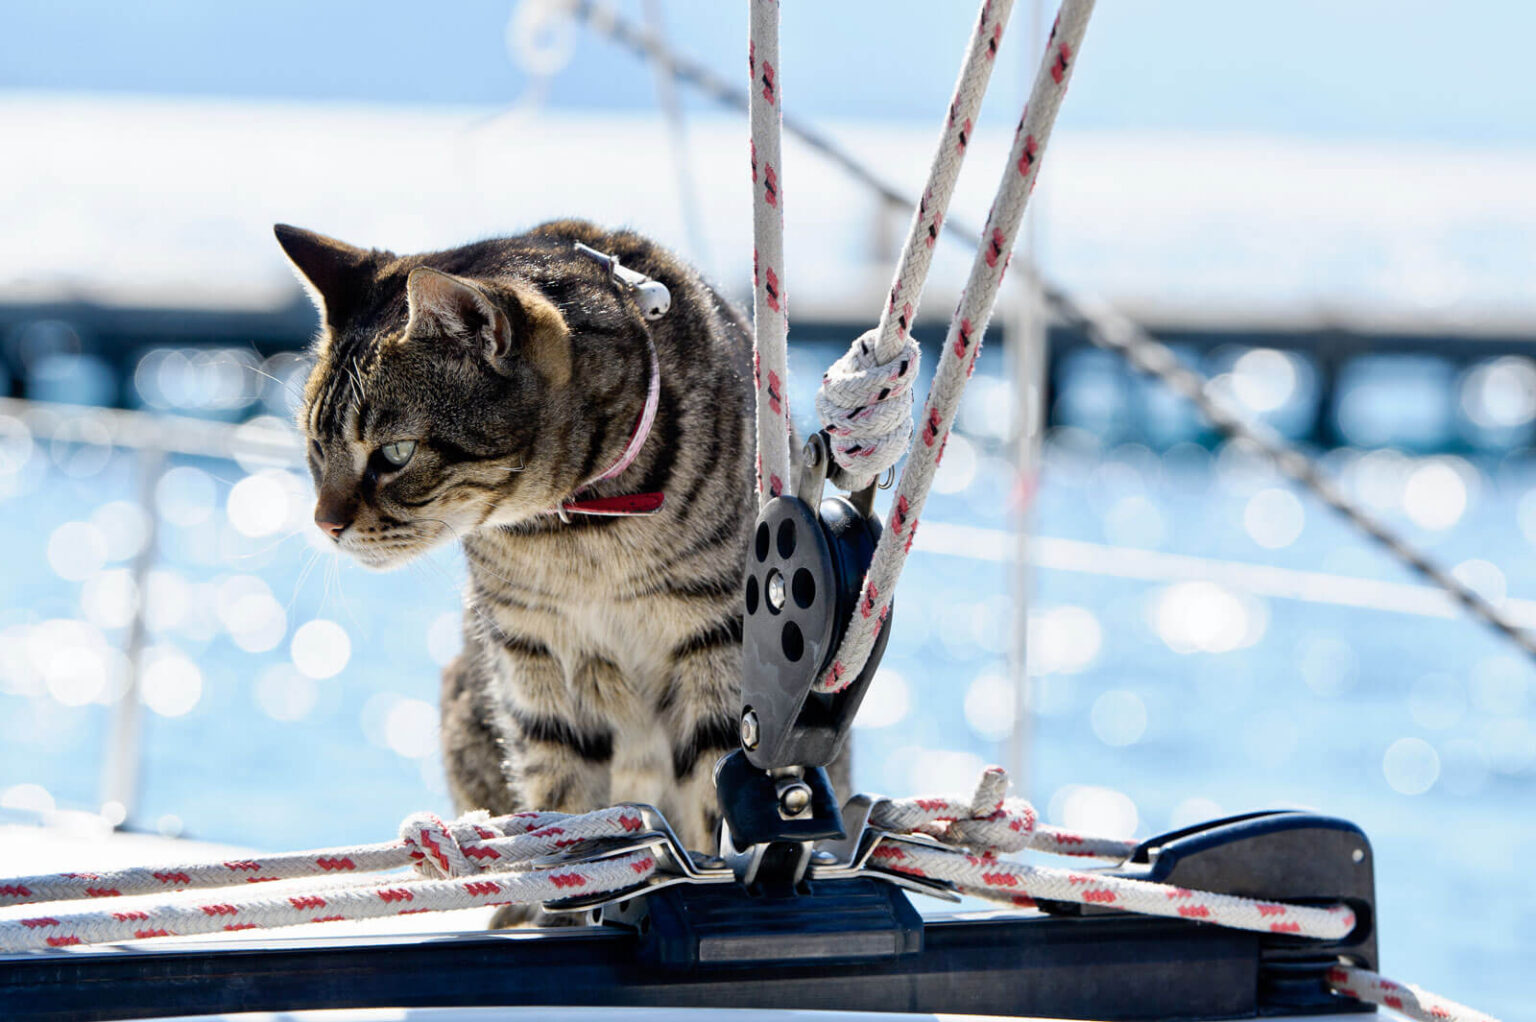 cat yacht race